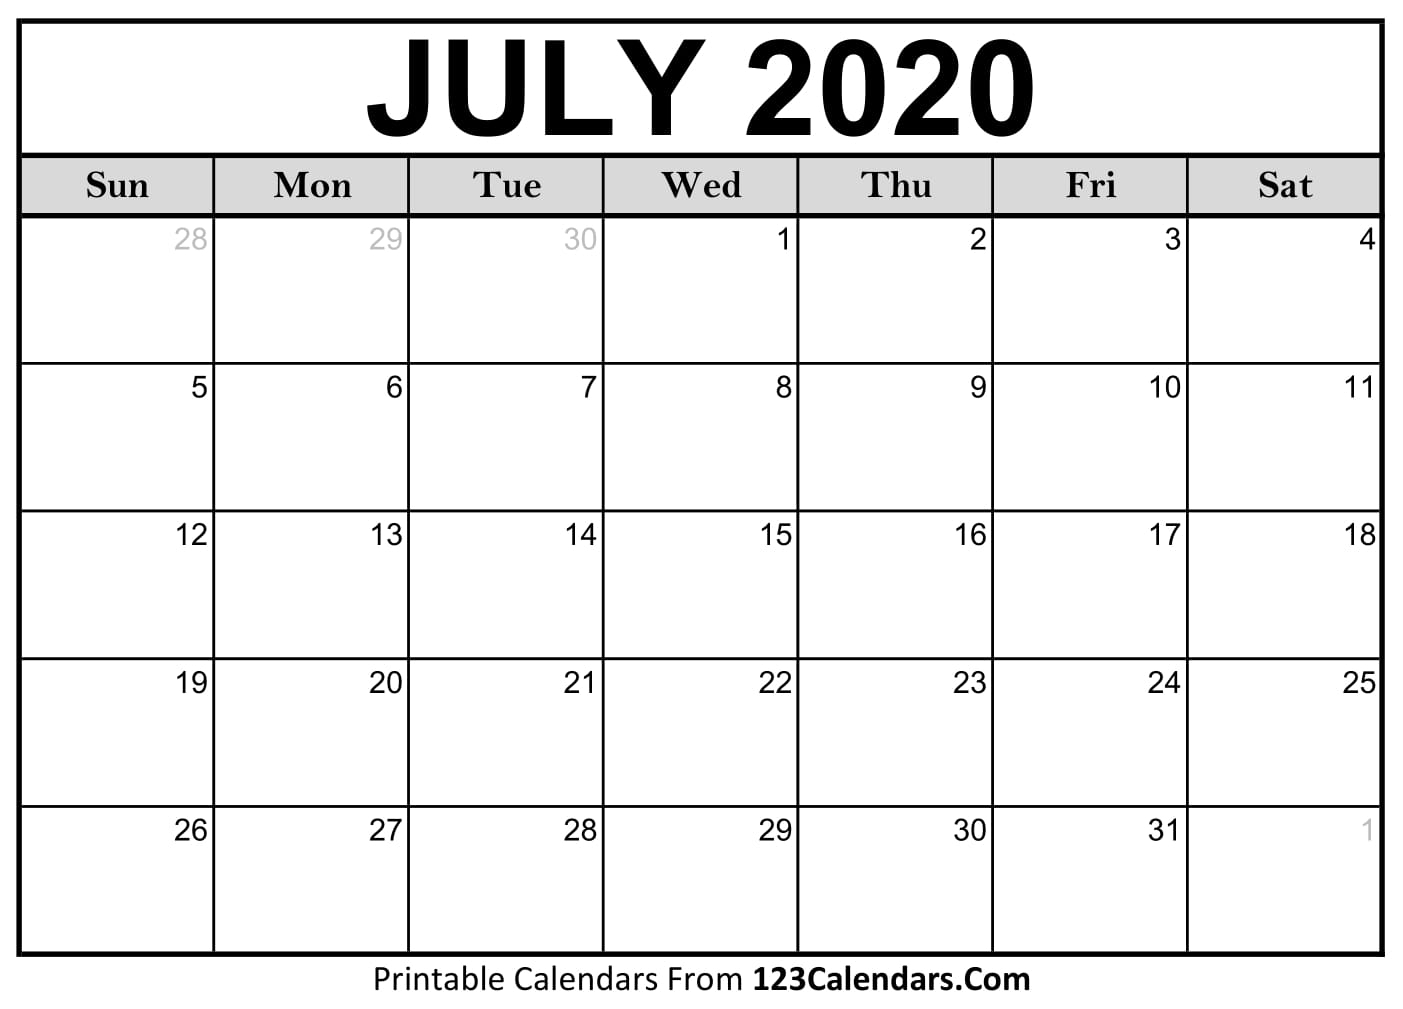 July 2020 Printable Calendar | 123Calendars